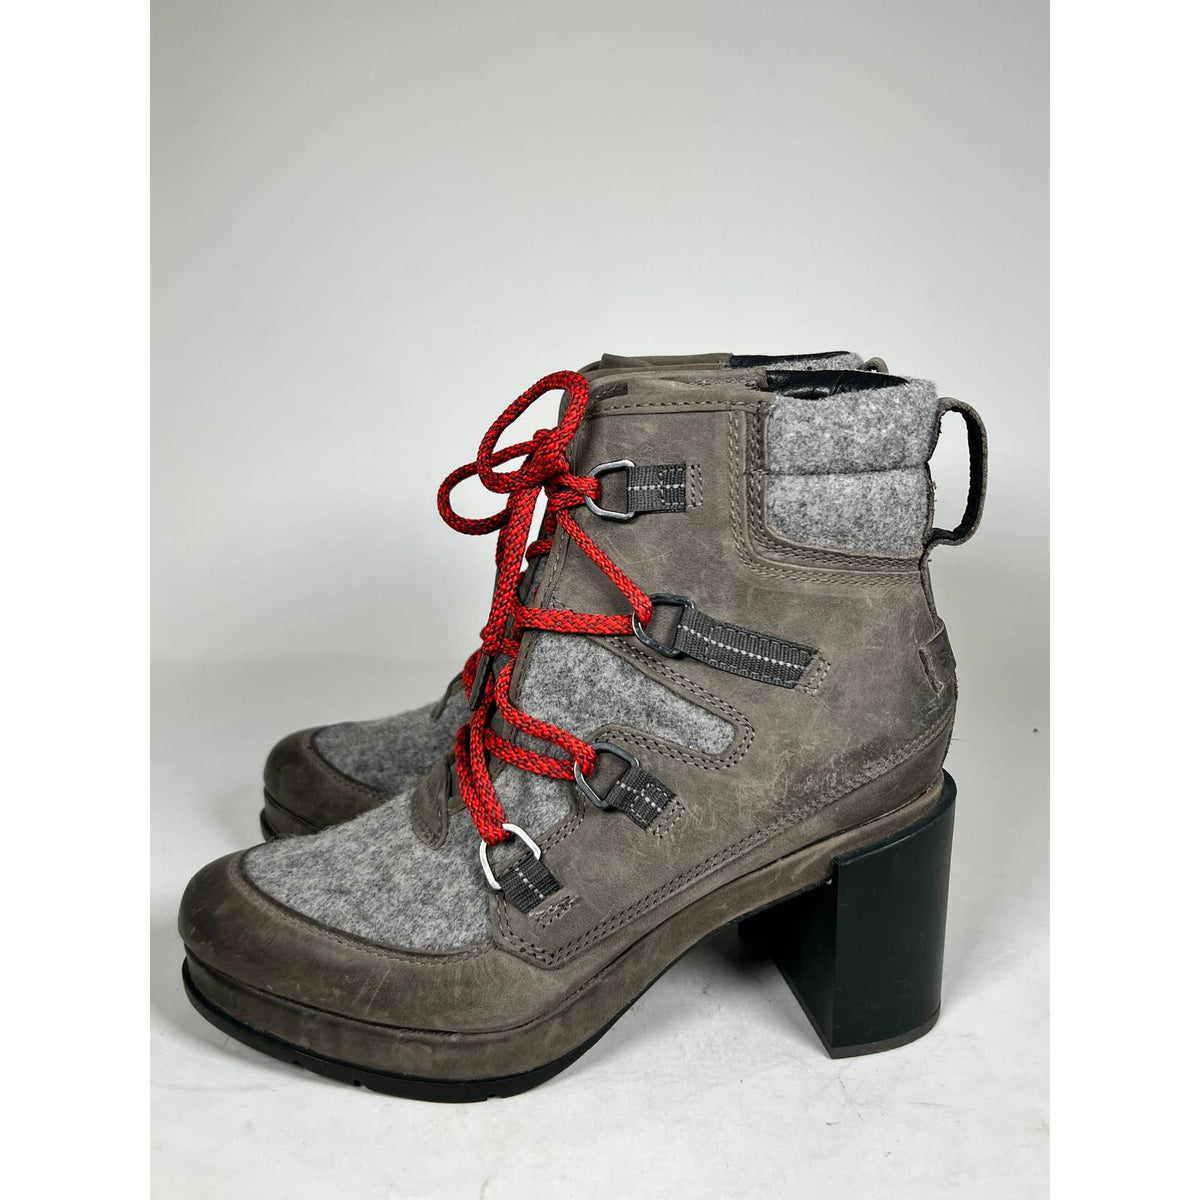 Sorel Blake Quarry Women’s Lace-Up Booties Waterproof Shoes